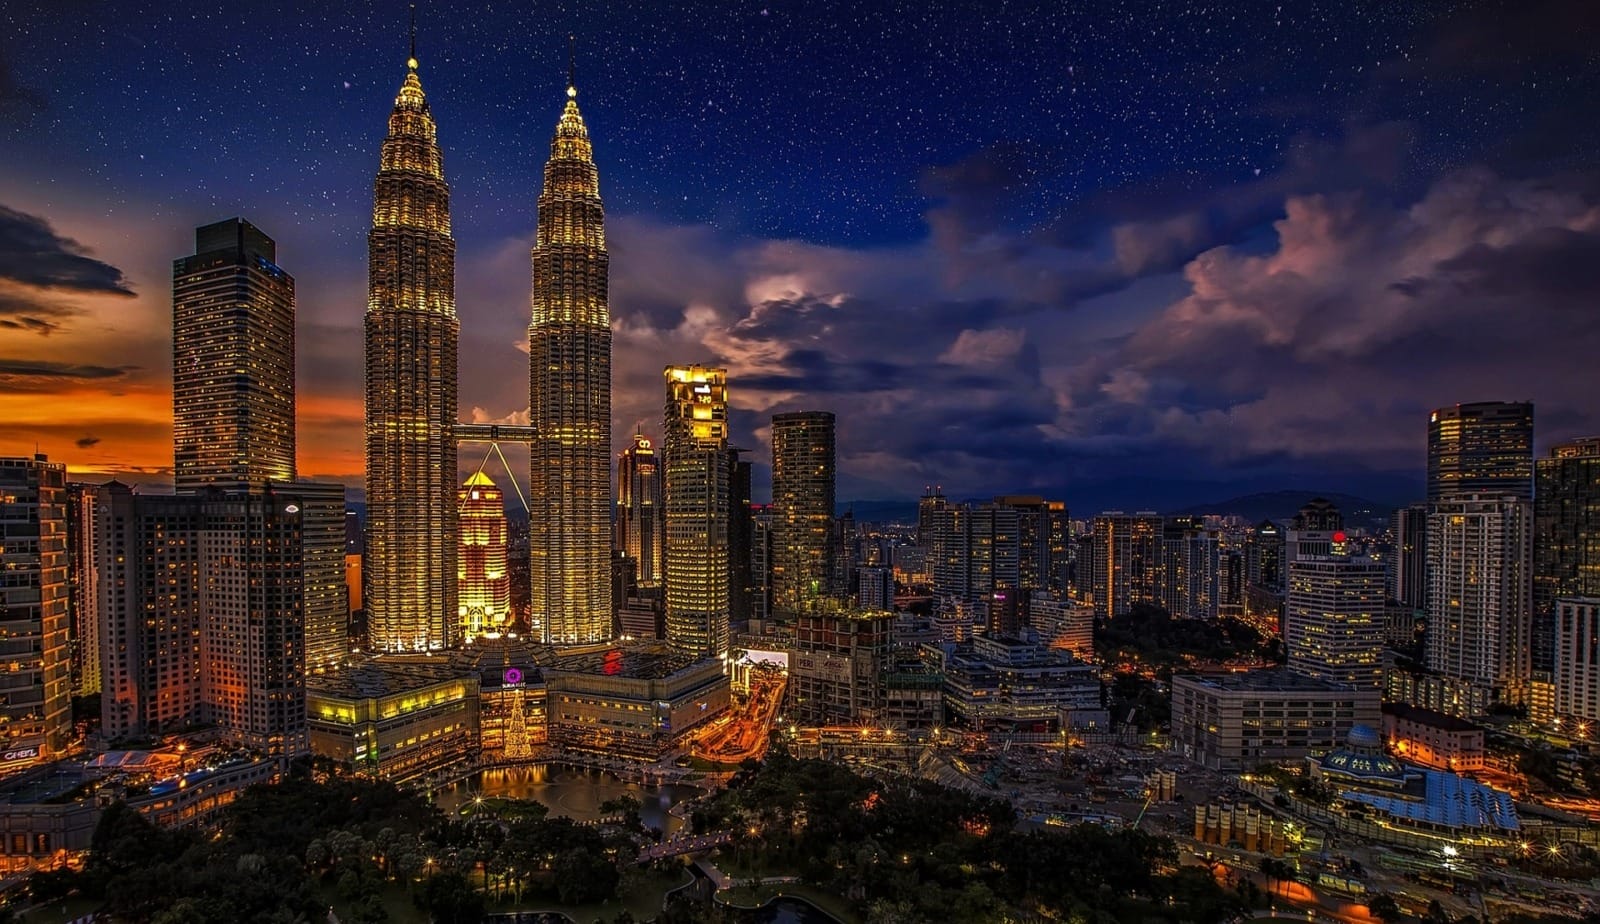 Kuala Lumpur Skyline at dusk 1